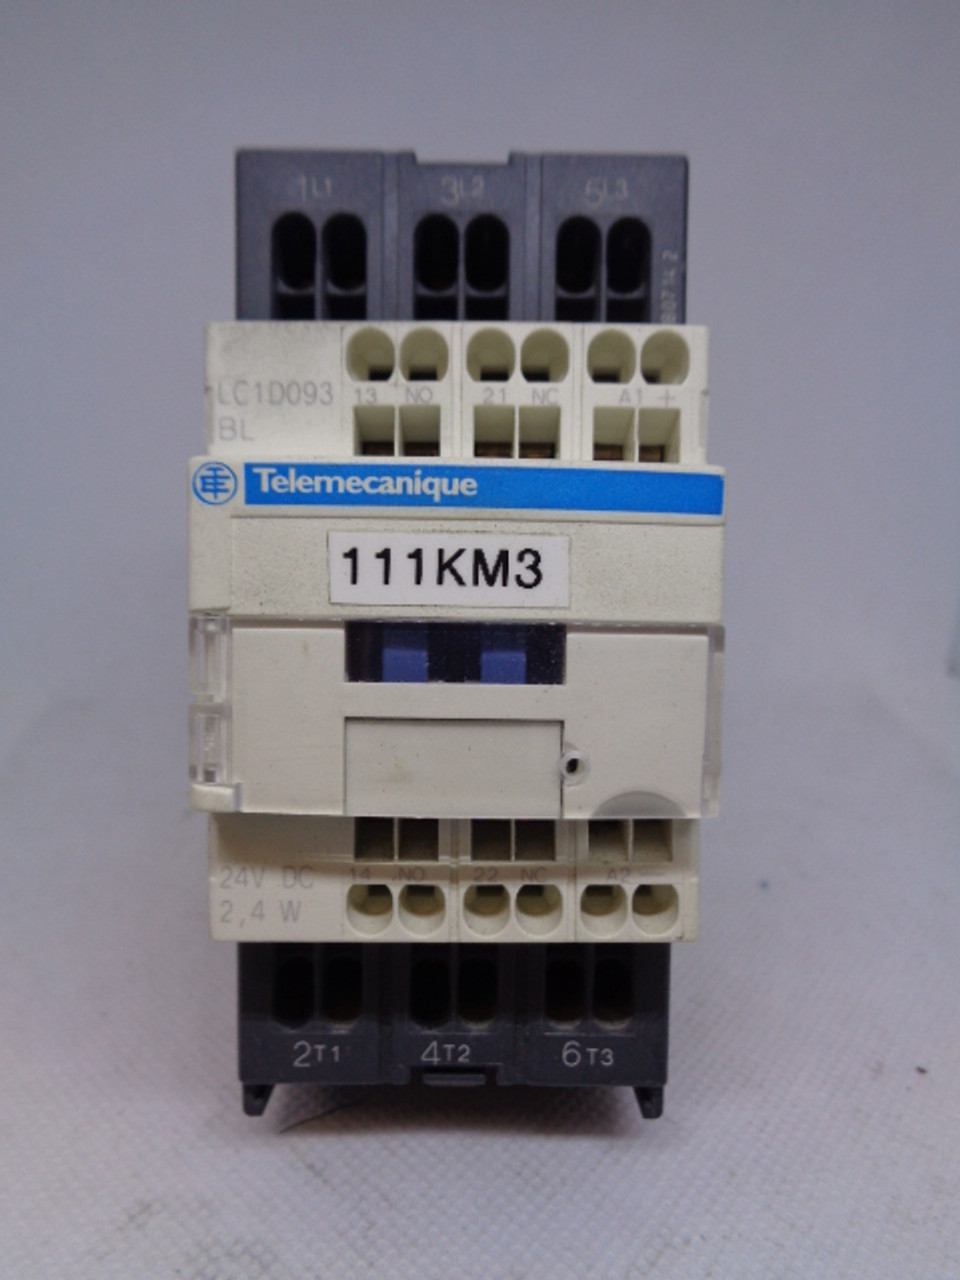 Telemecanique LC1D093 BL Contactor, 24V DC, 2,4W